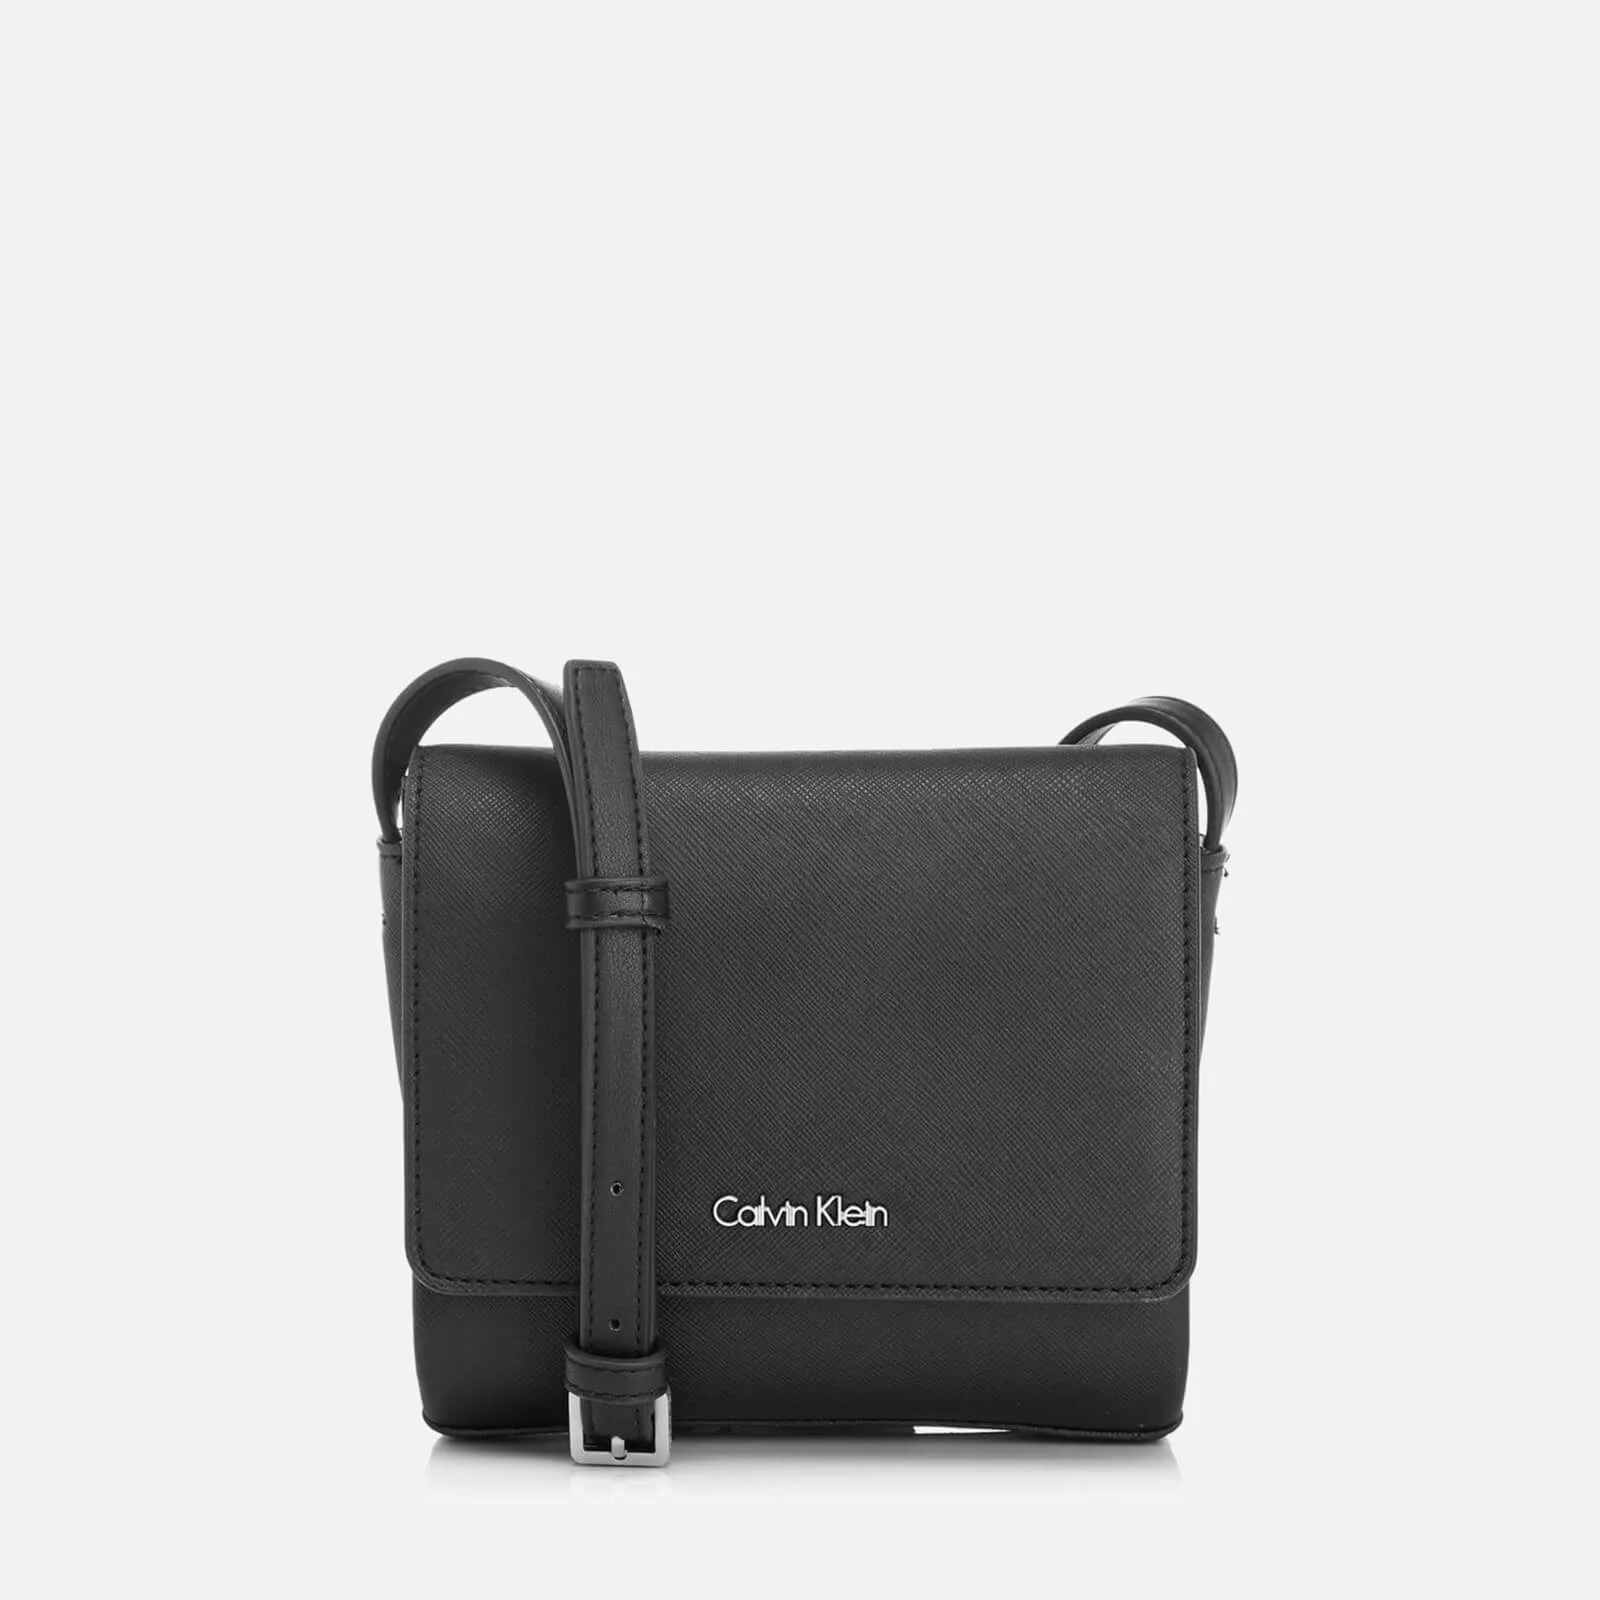 Calvin Klein Women's M4Rissa Flap Cross Body Bag - Black Image 1